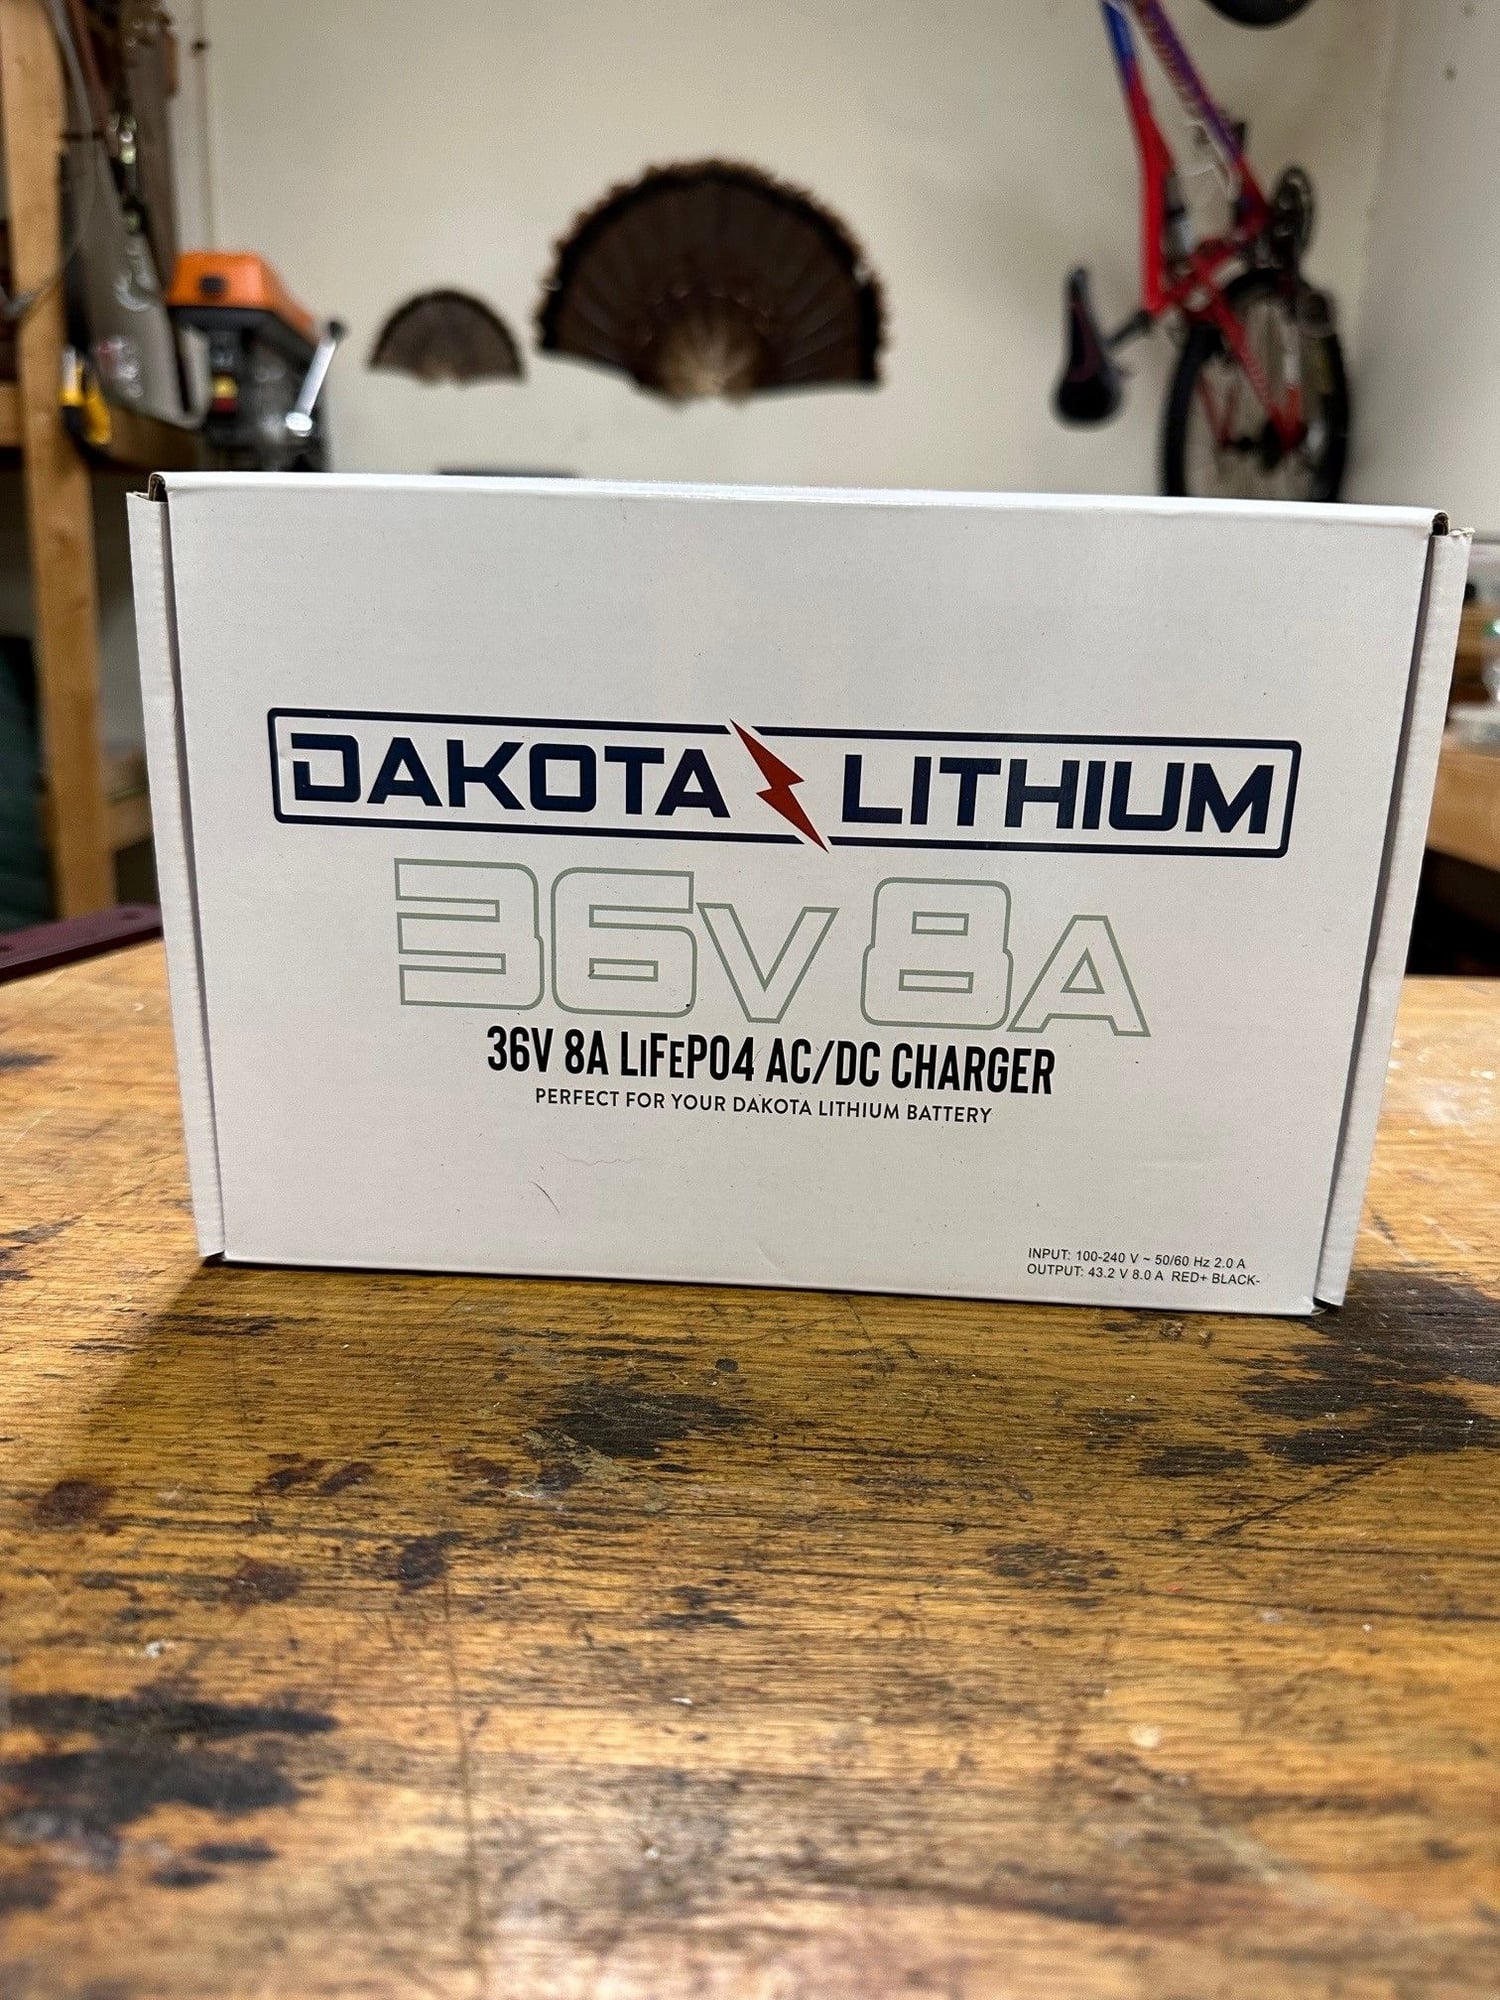 36V 8A Dakota Lithium LiFePO4 Battery Charger